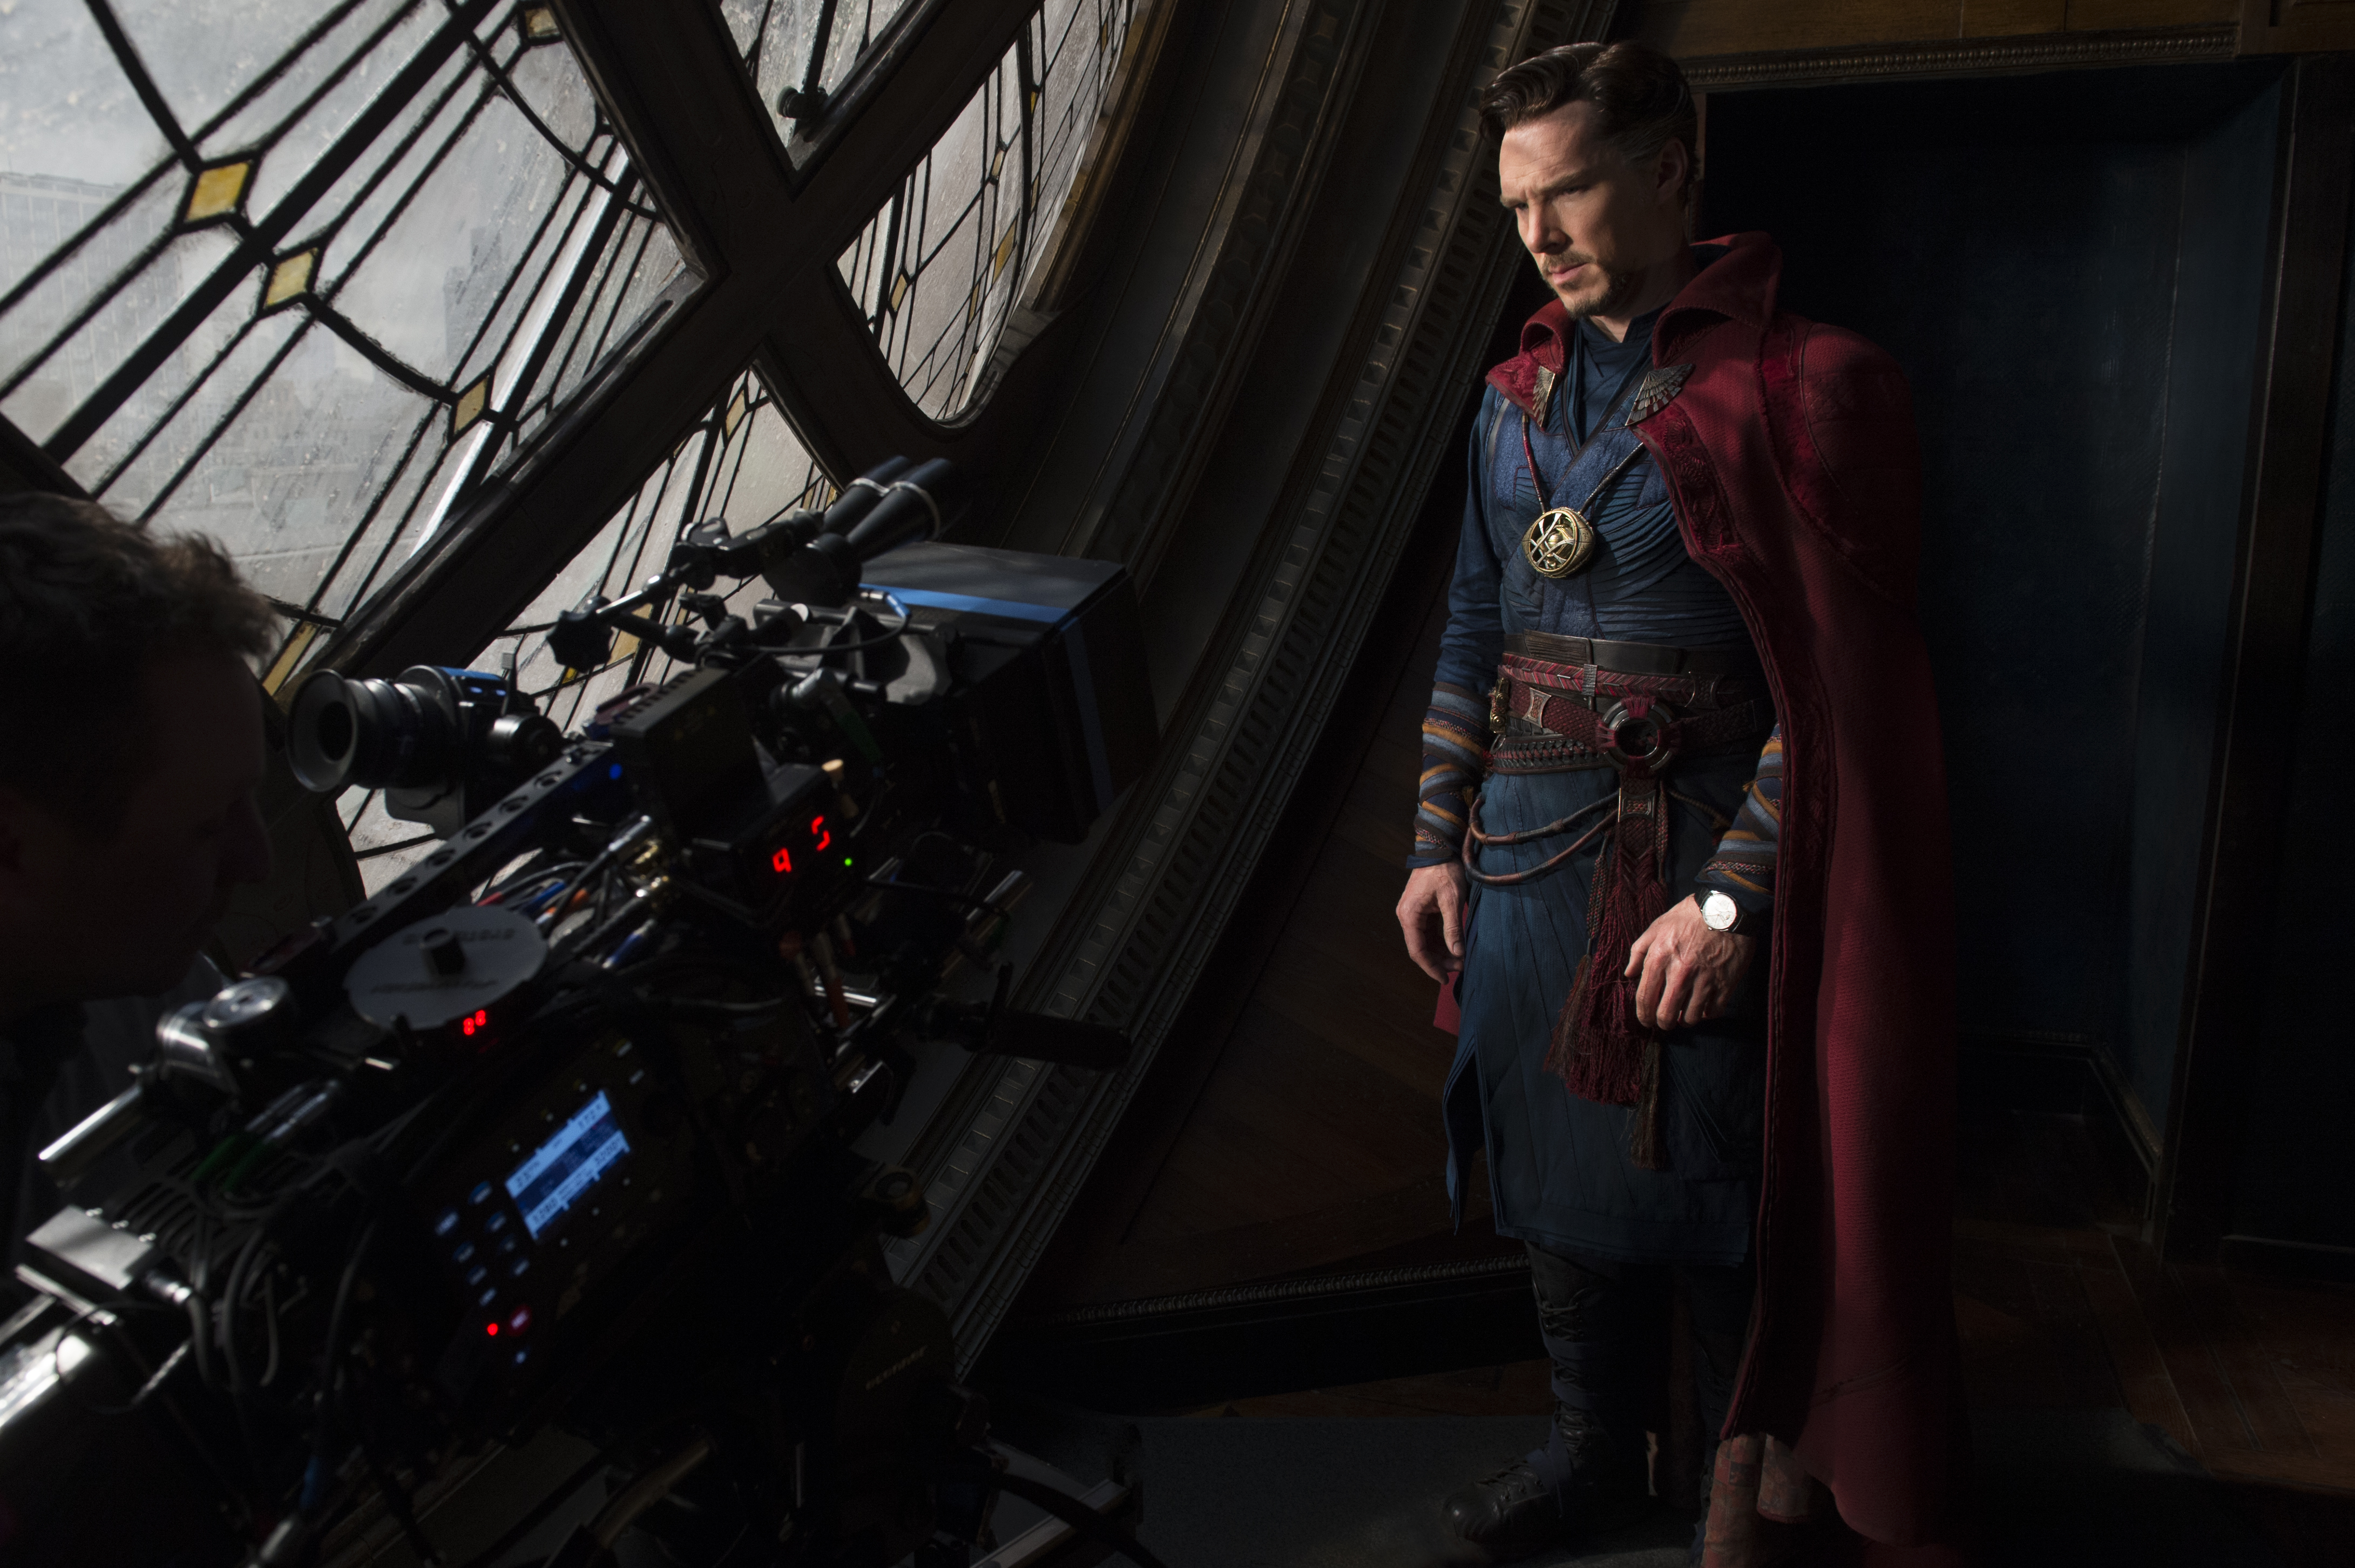 Marvel's DOCTOR STRANGE Benedict Cumberbatch (Doctor Strange) on set. Photo Credit: Jay Maidment ©2016 Marvel. All Rights Reserved.